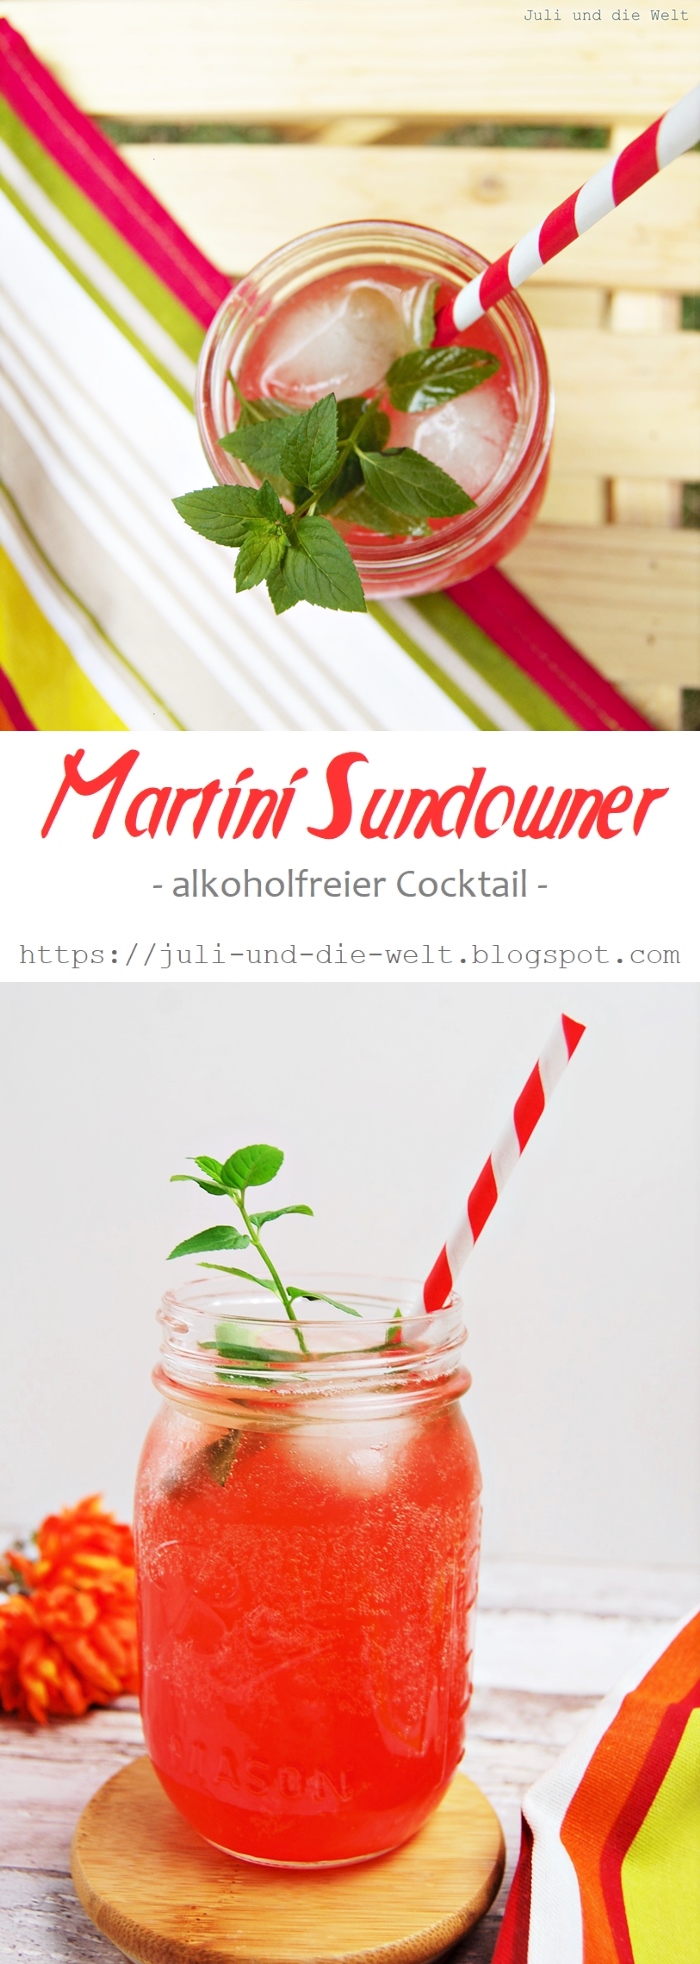 Martini Sundowner